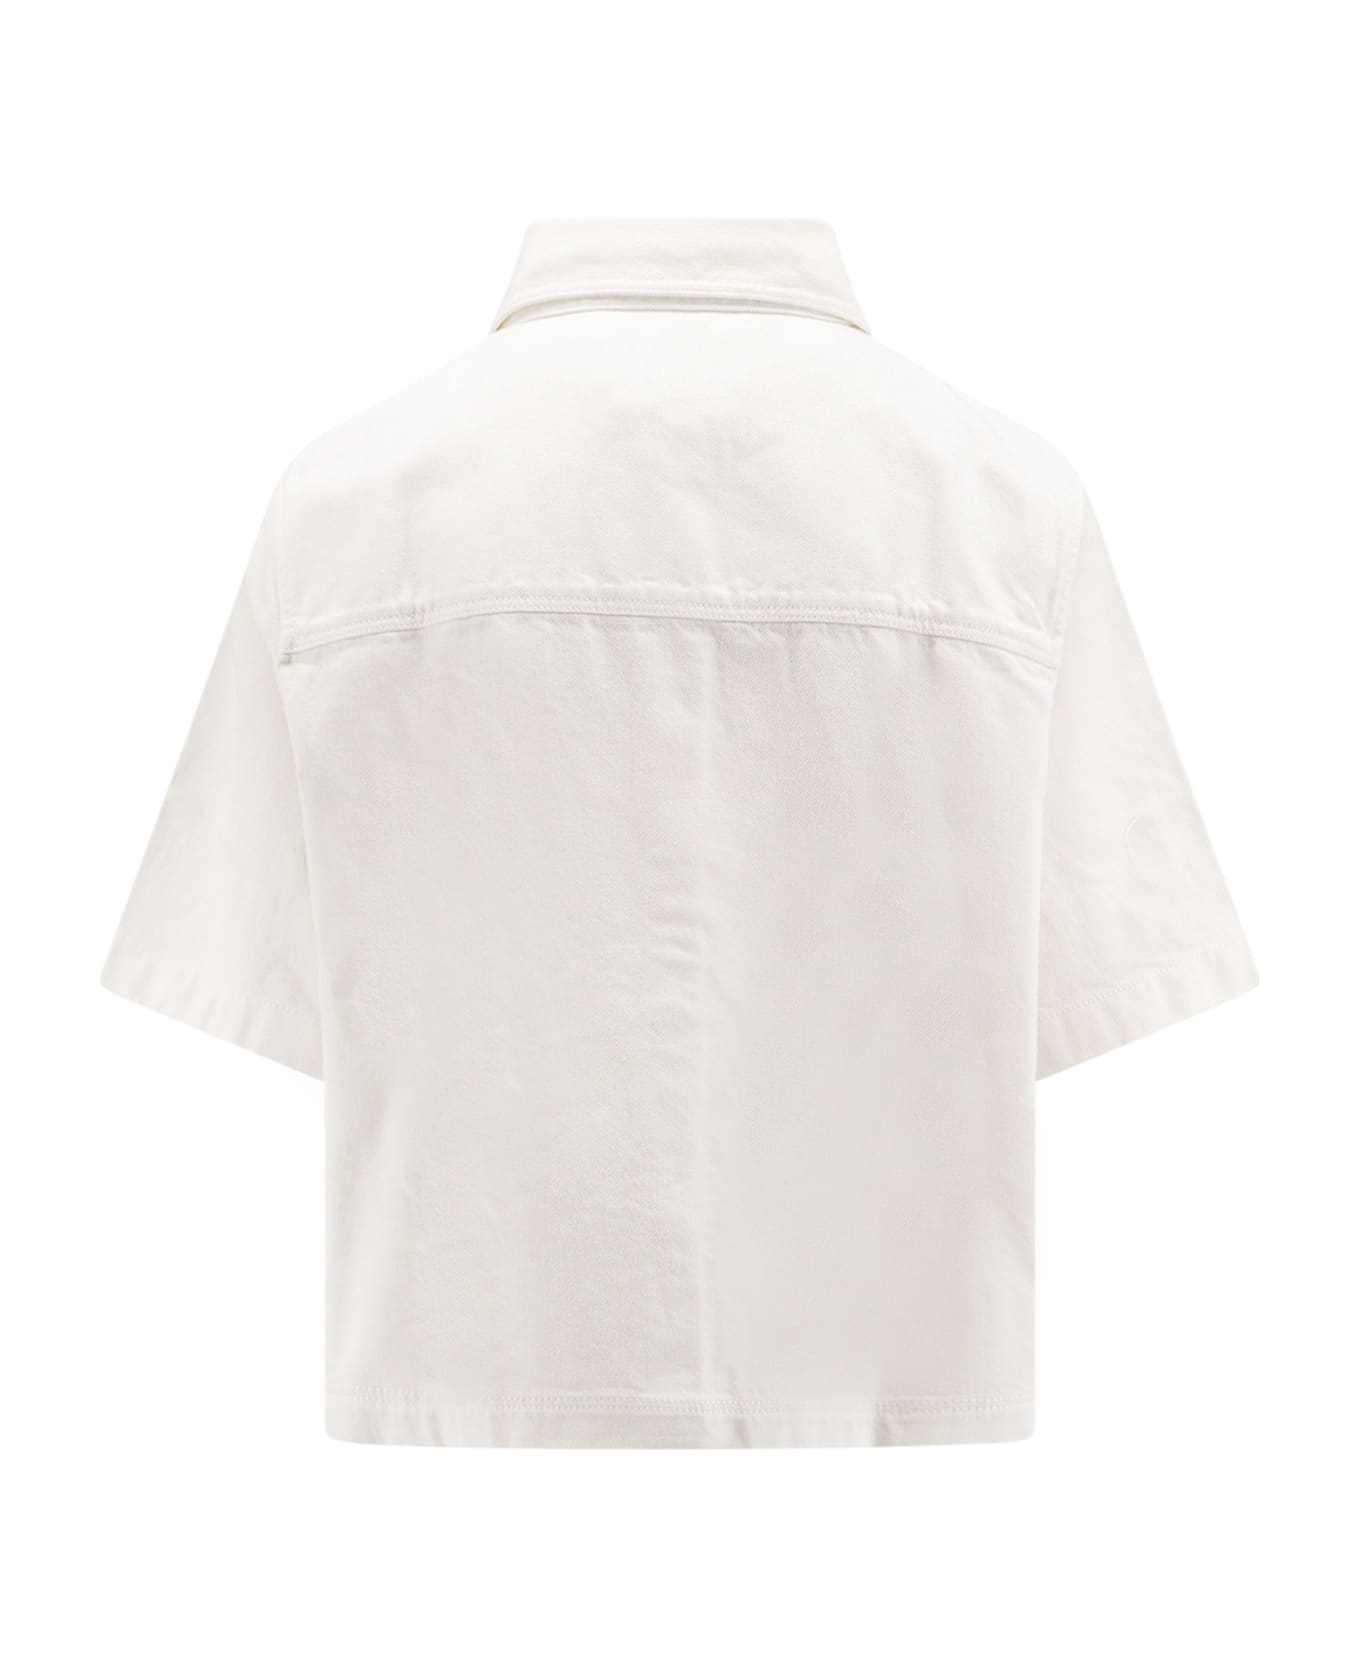 Closed Shirt - White シャツ